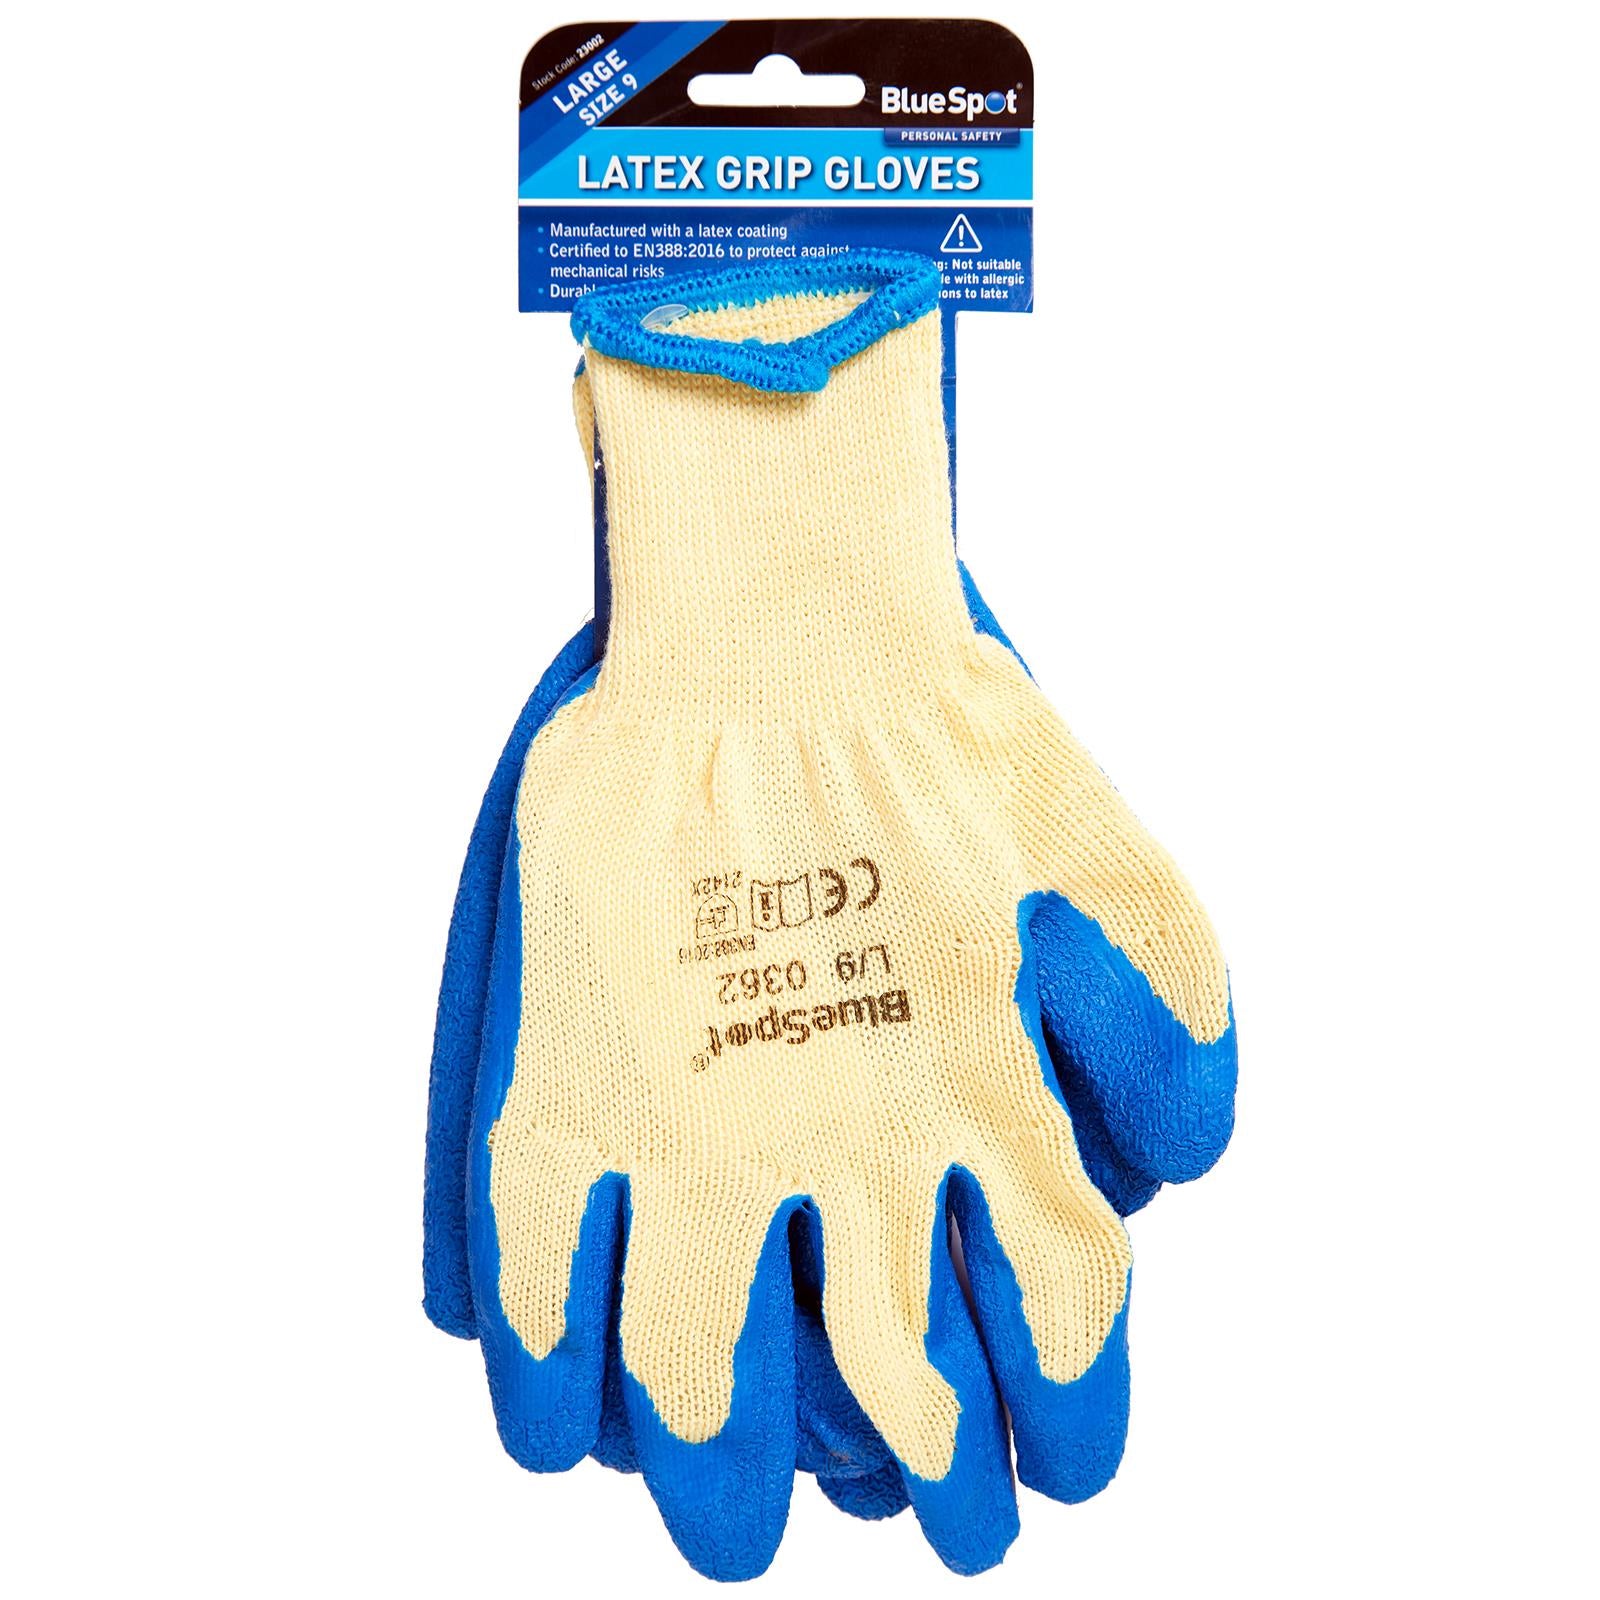 BlueSpot Latex Grip Gloves 1 Pair